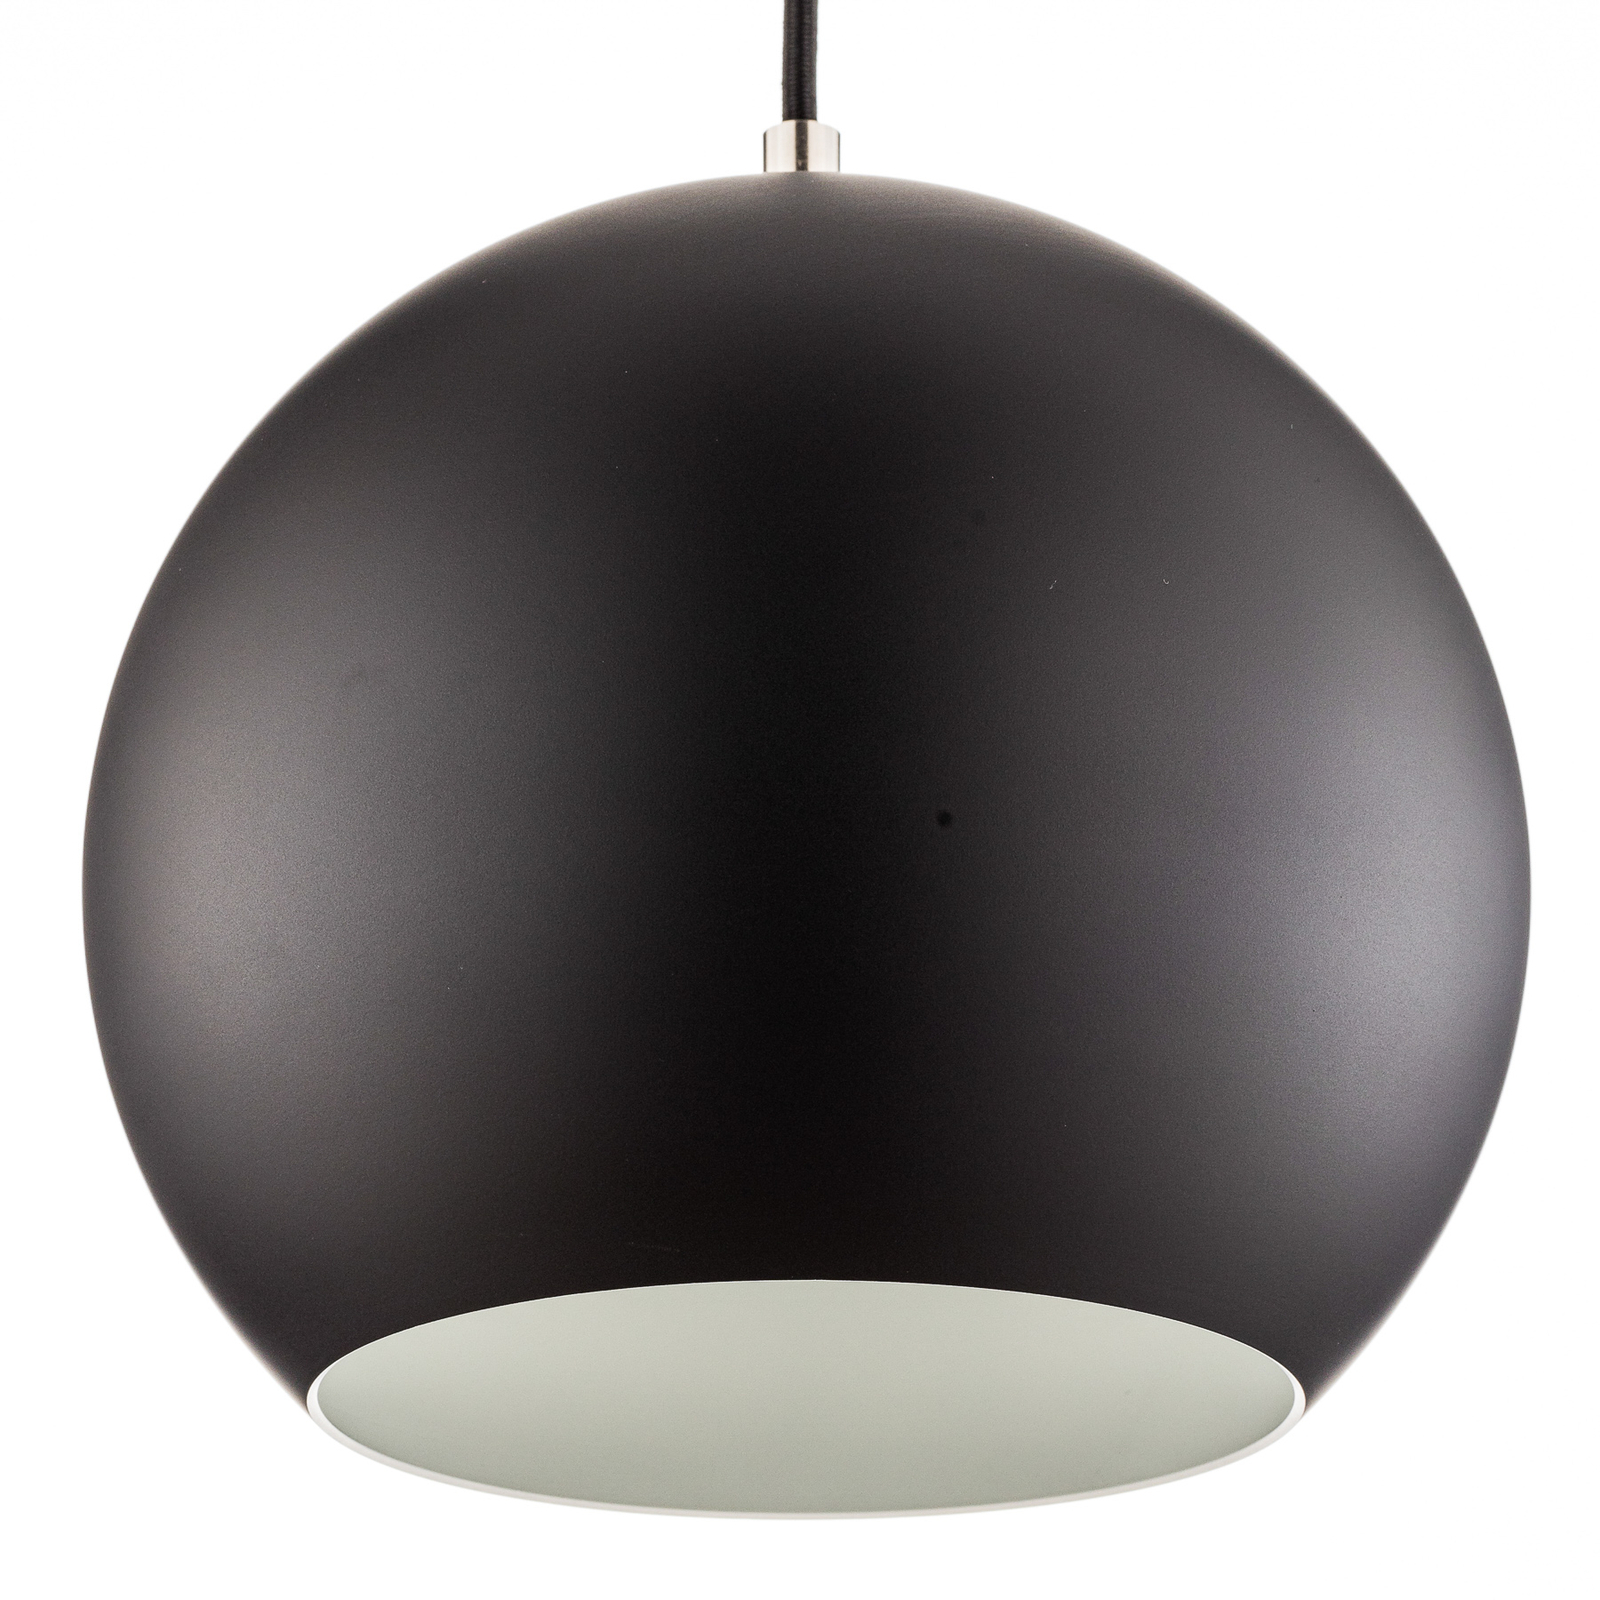 &Традиционна висяща лампа Topan VP6, Ø 21 cm, черен мат